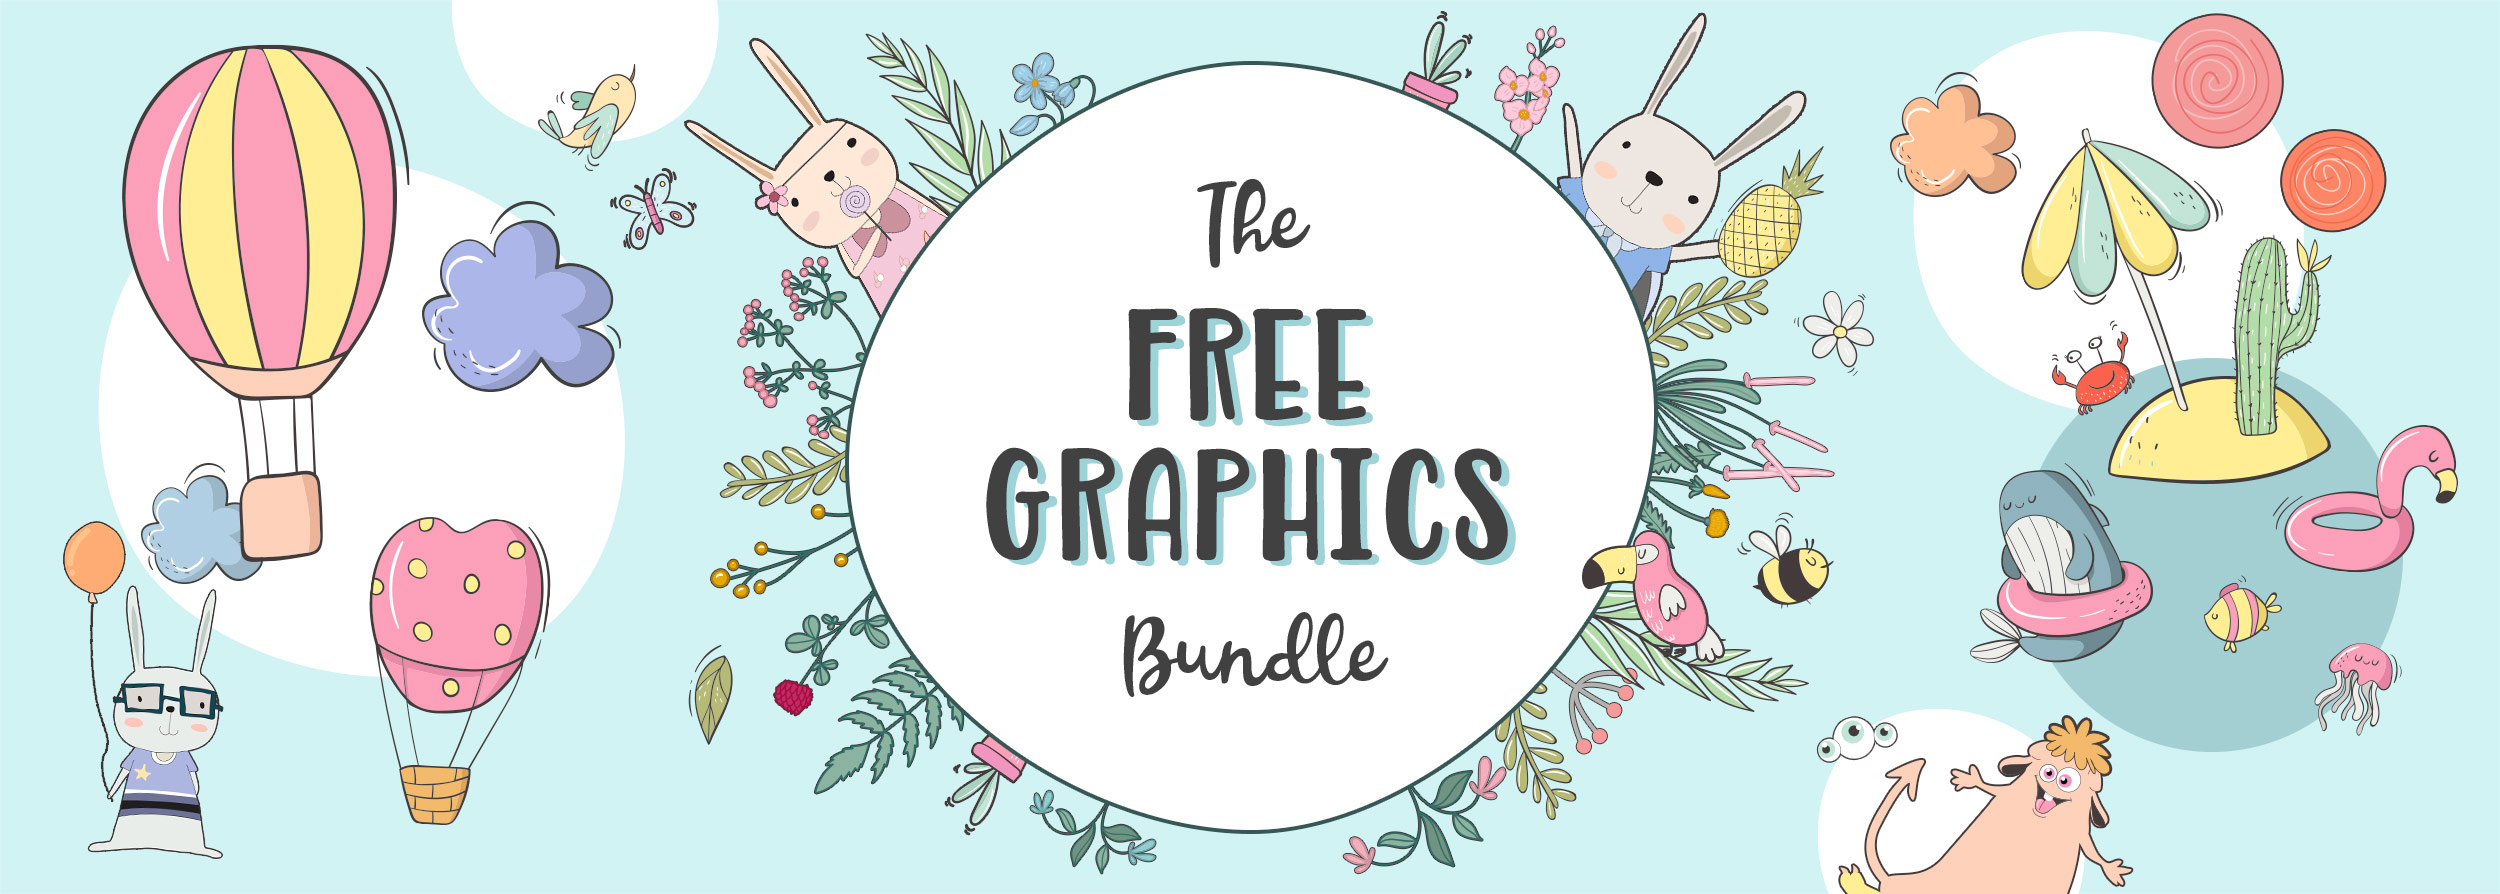 Download Free Graphics Bundle Design Bundles